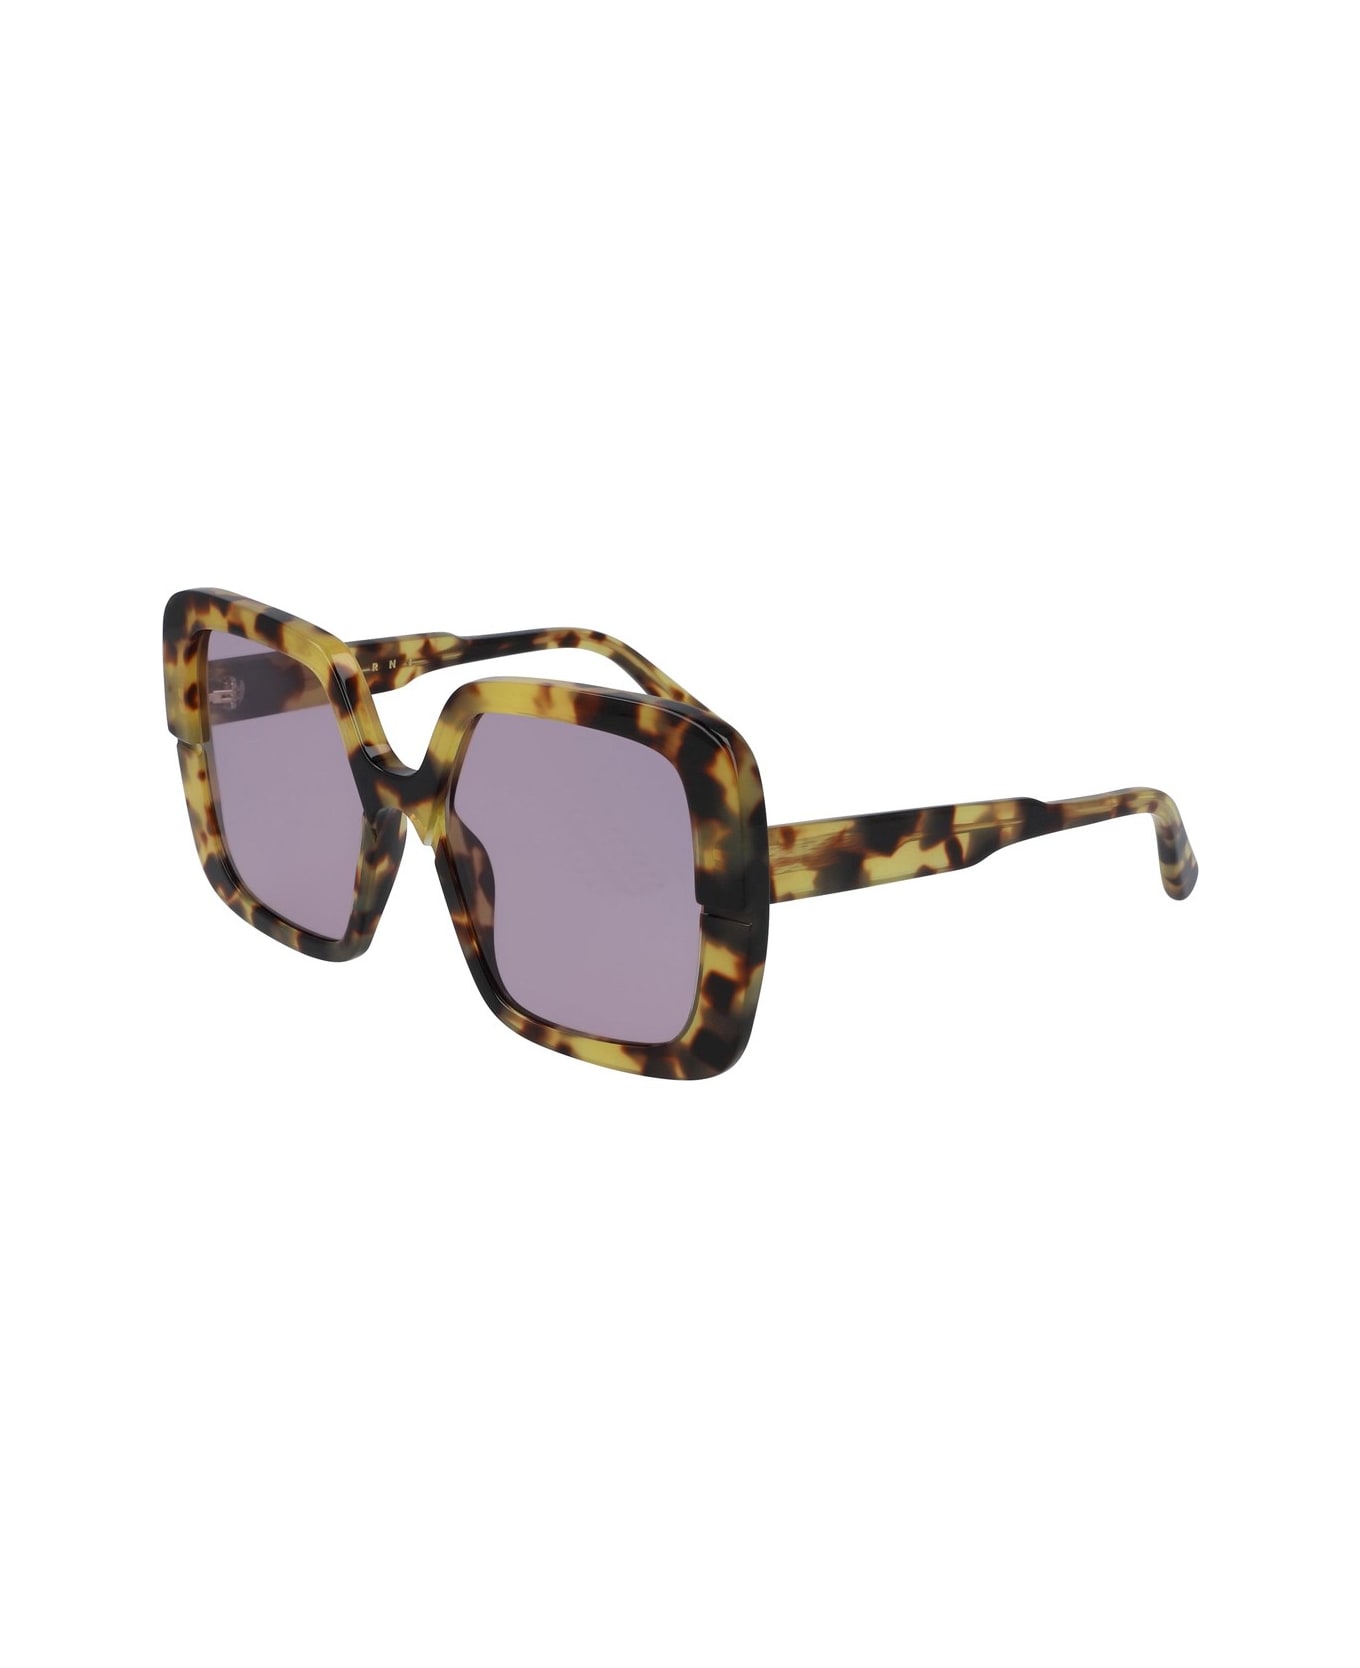 Marni Eyewear Me643s Sunglasses - Marrone